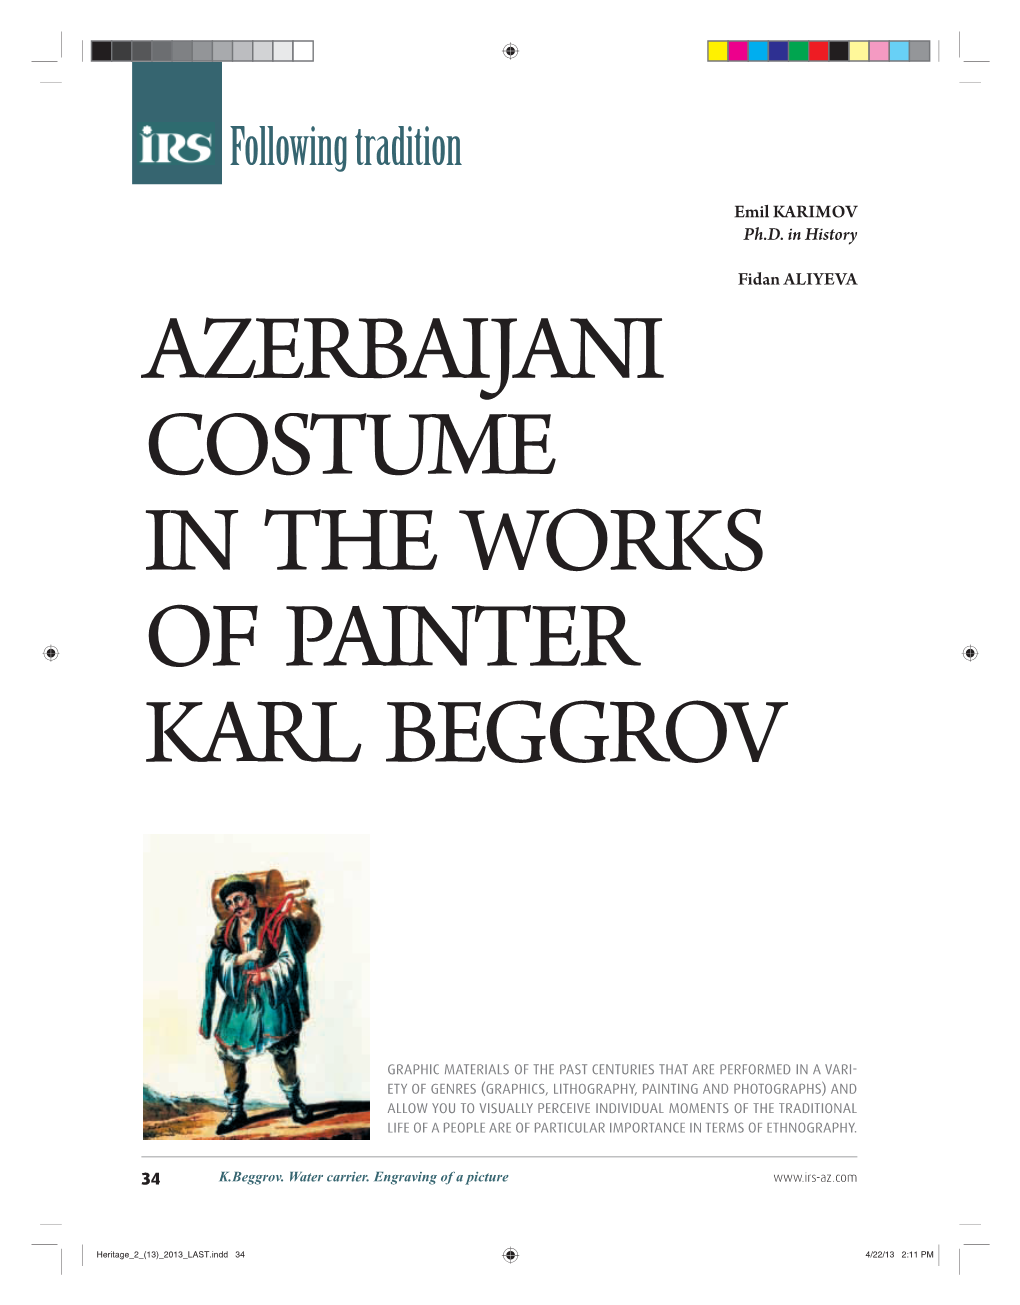 Azerbaijani Costume in the Works of Painter Karl Beggrov